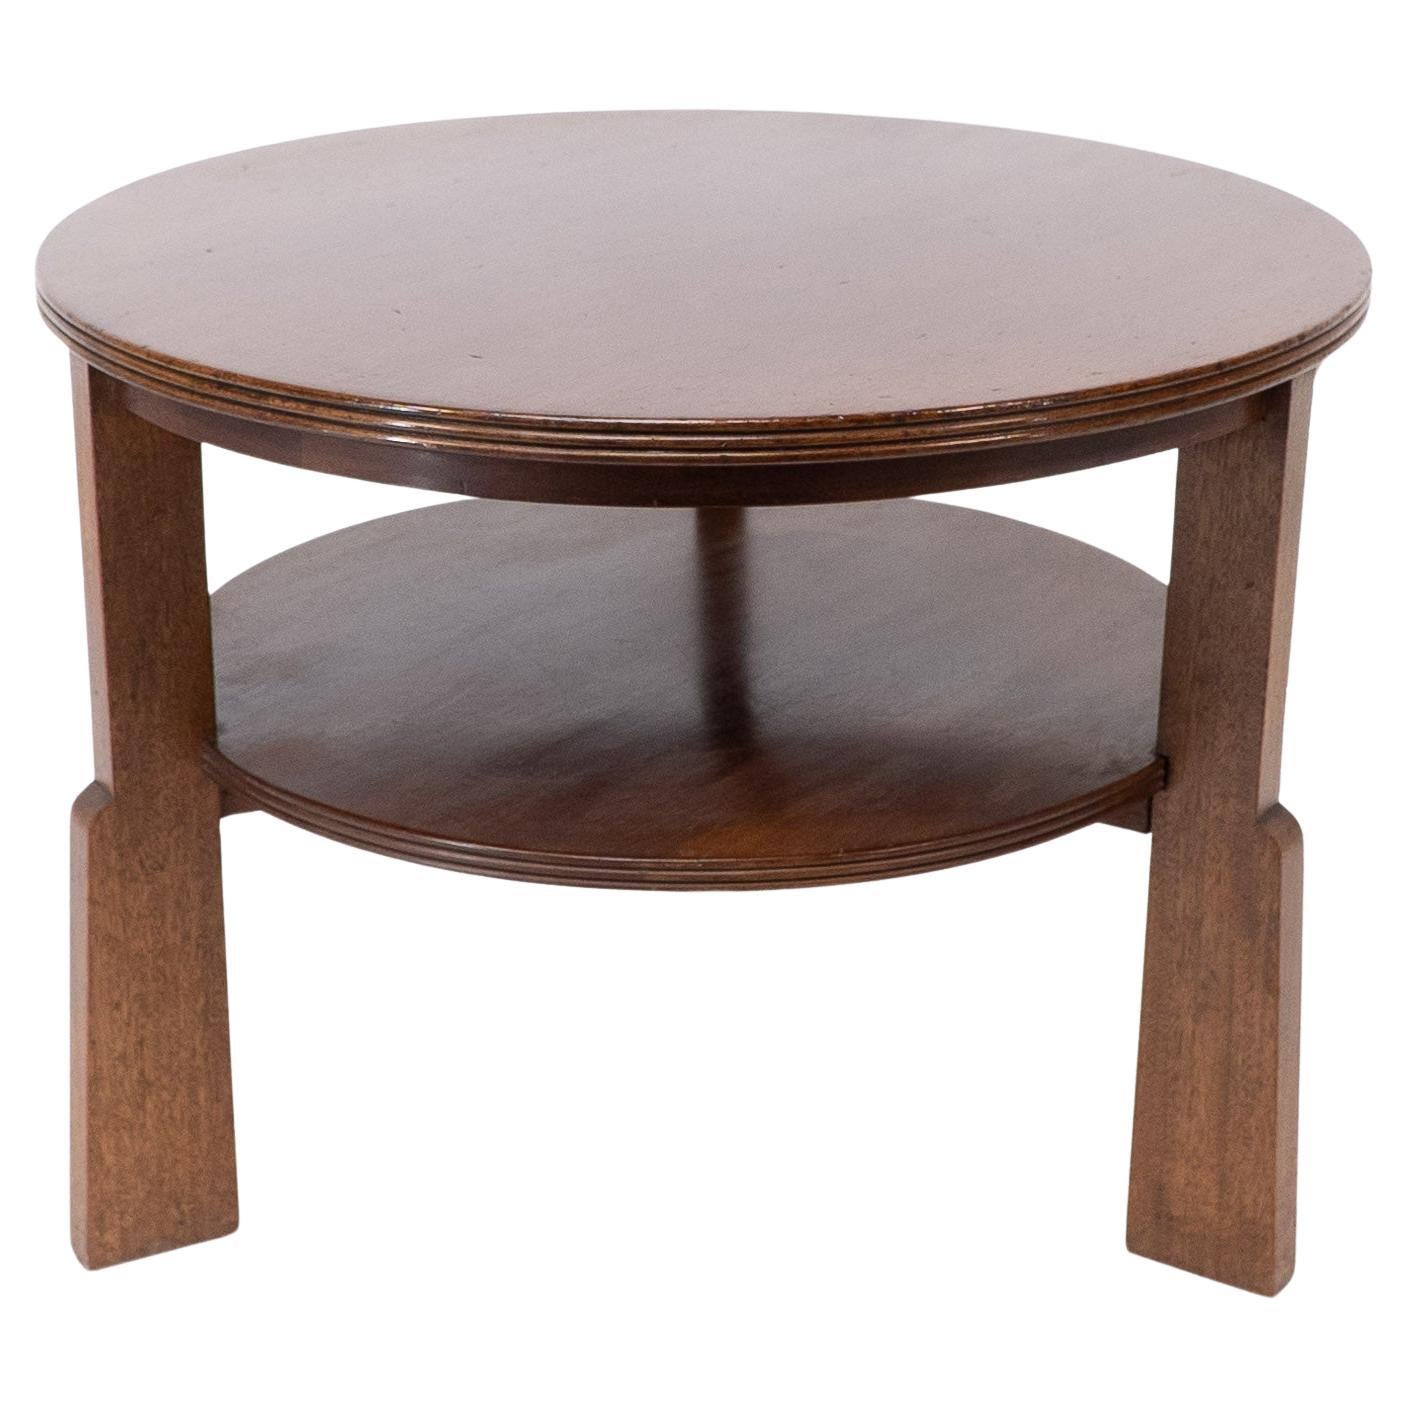 Gordon Russell. A gunstock figured walnut coffee table on gunstock shaped legs